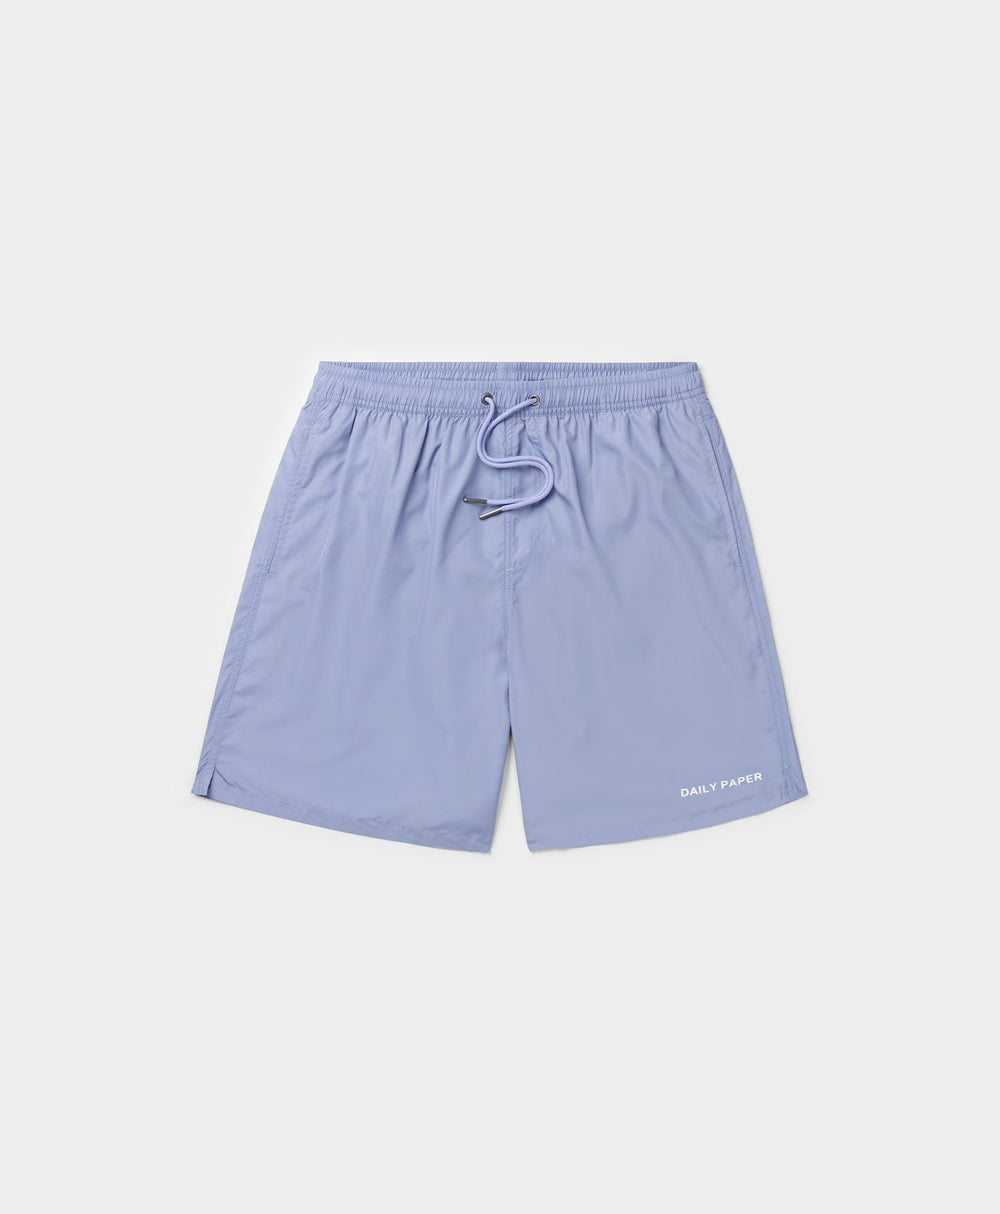 DP - Purple Impression Eswim Shorts - Packshot - Front